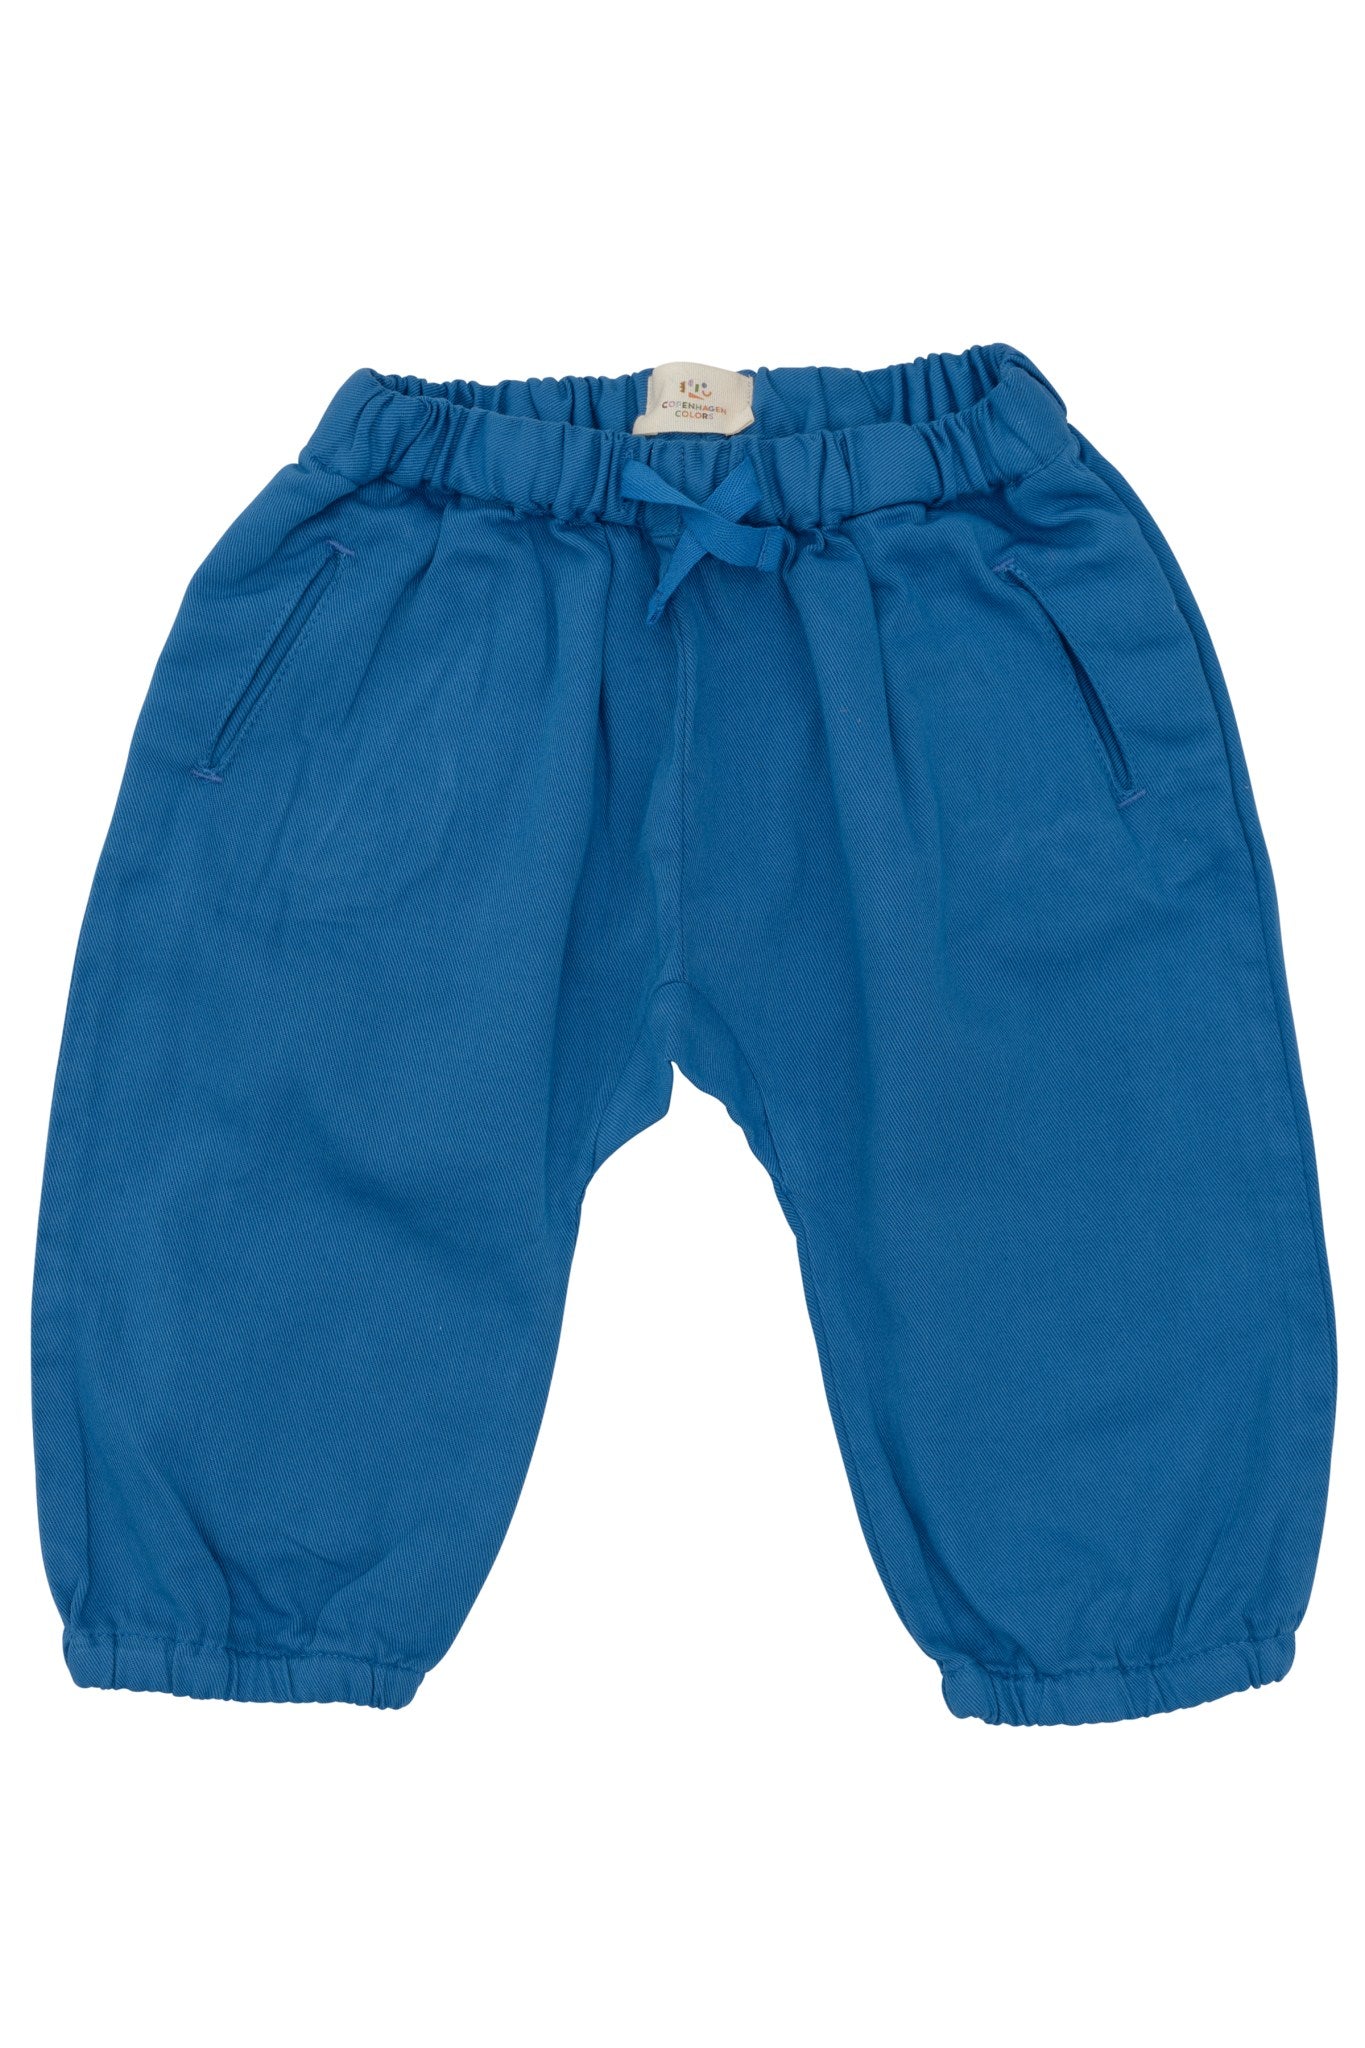 Shorts In Pointelle Cream Copenhagen Colors - Babyshop